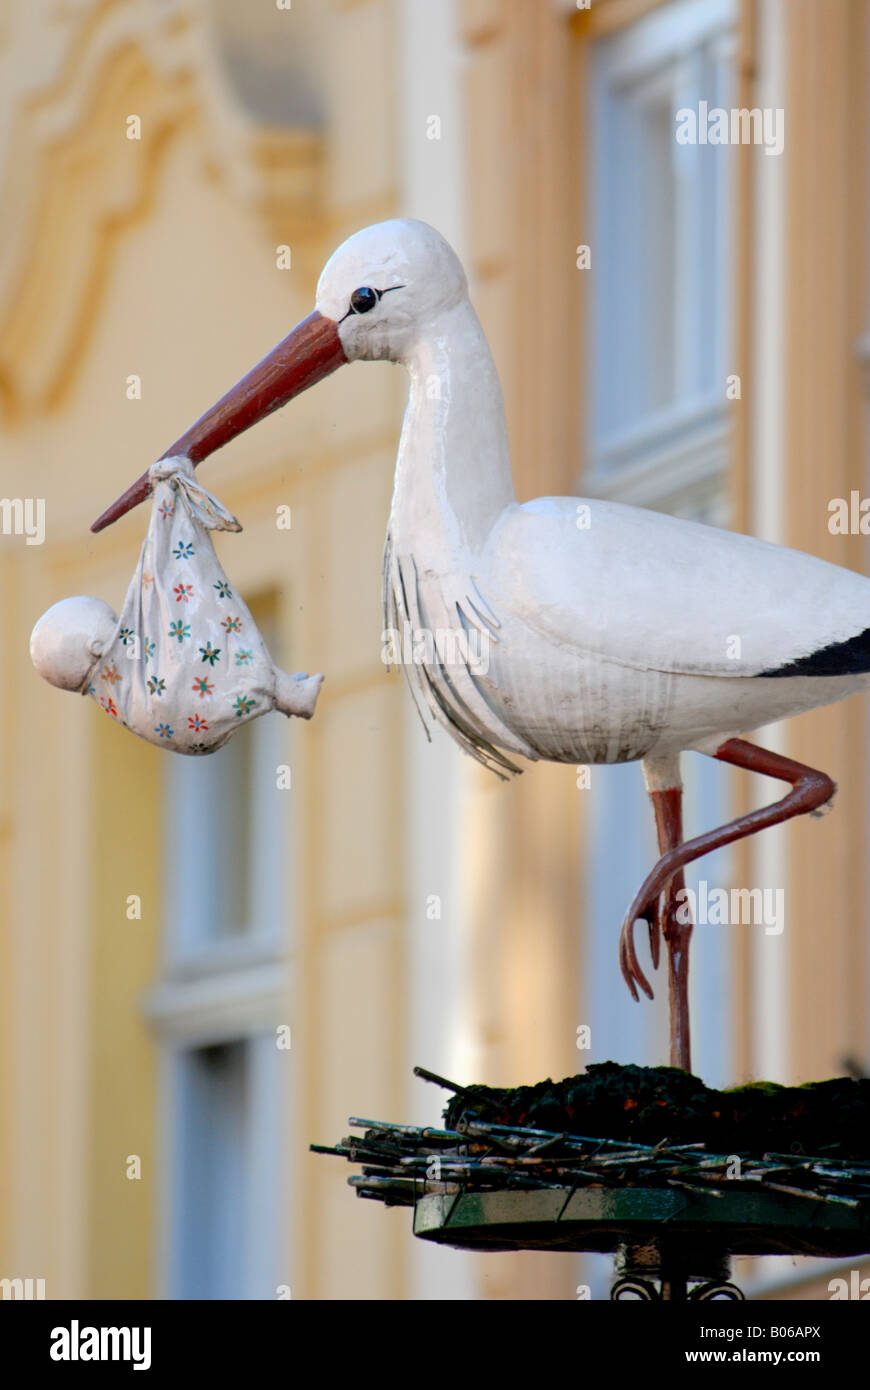 Europe, Germany, Bavaria, Bamberg, Store signage of Stork delivering baby child Stock Photo